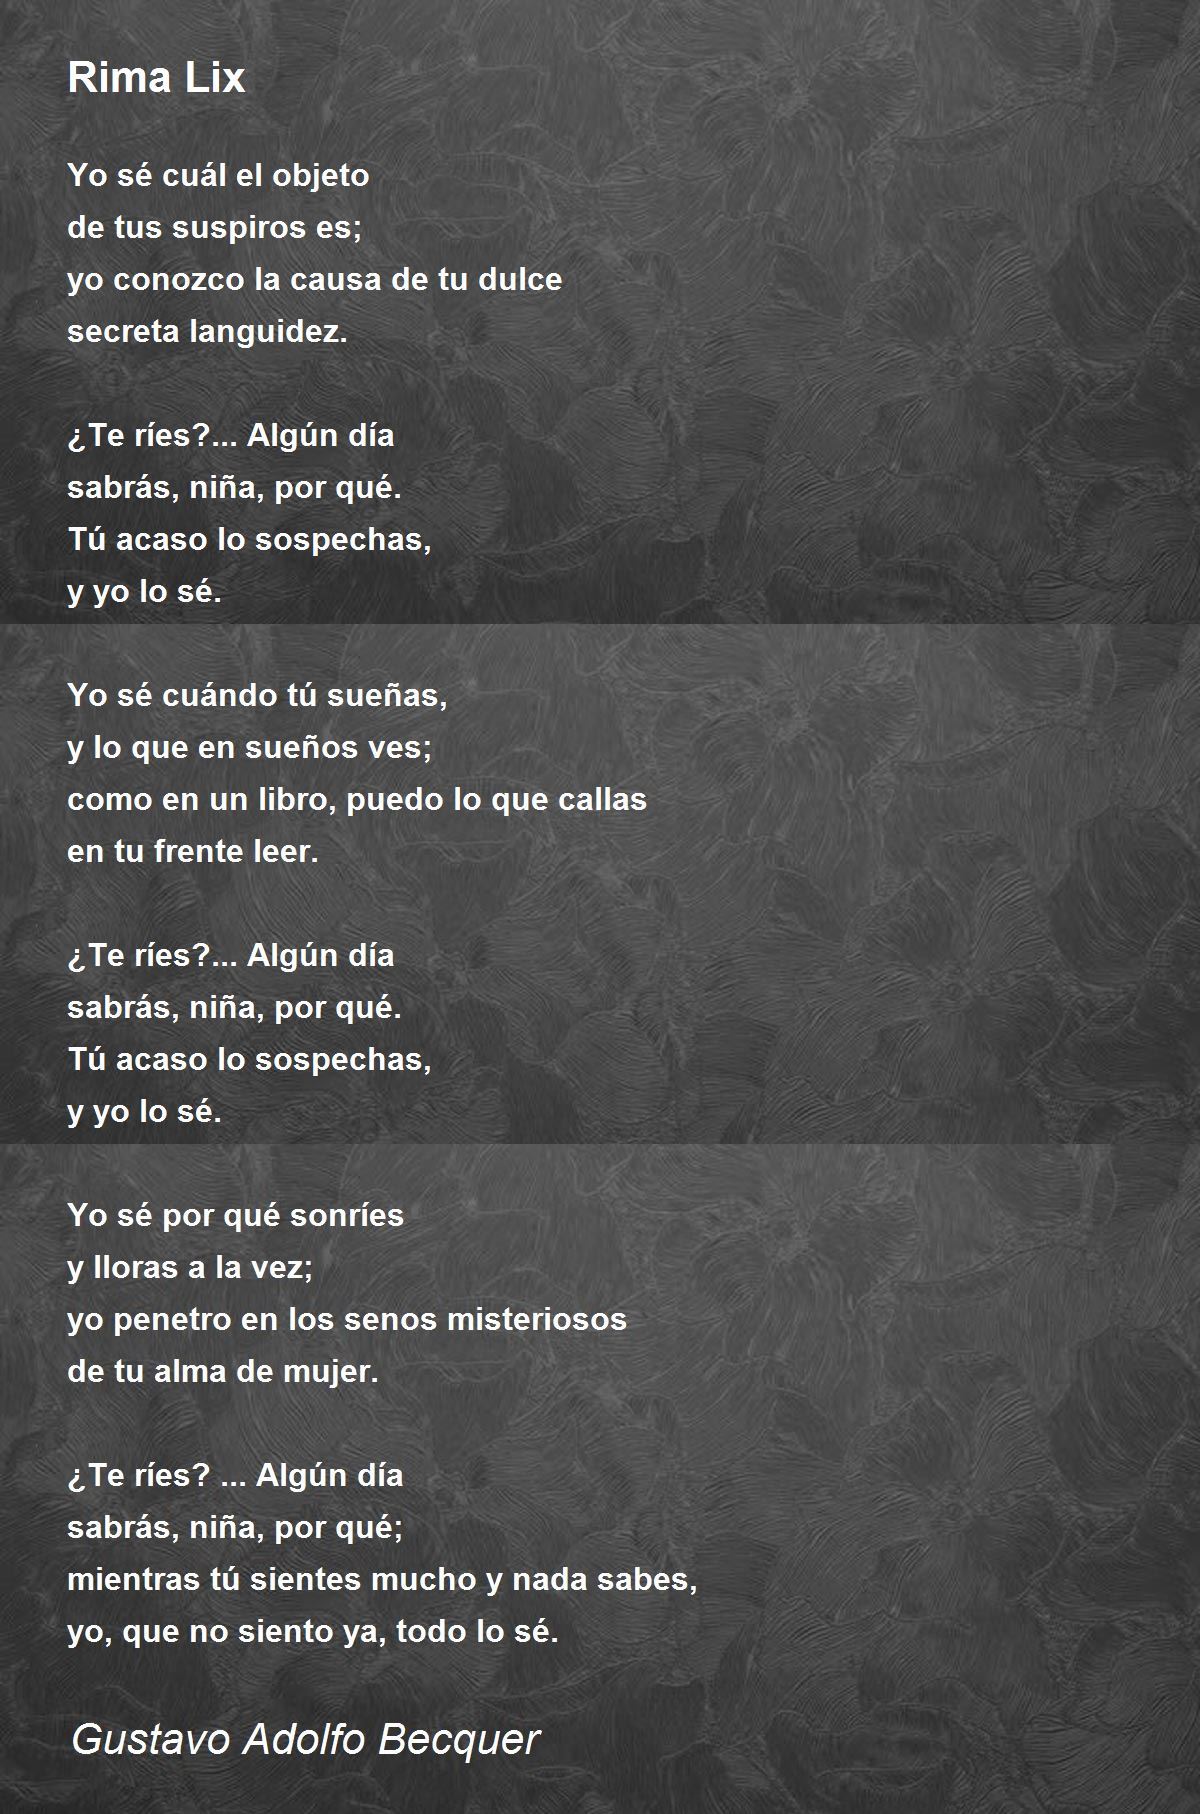 Rima Lix - Rima Lix Poem by Gustavo Adolfo Becquer